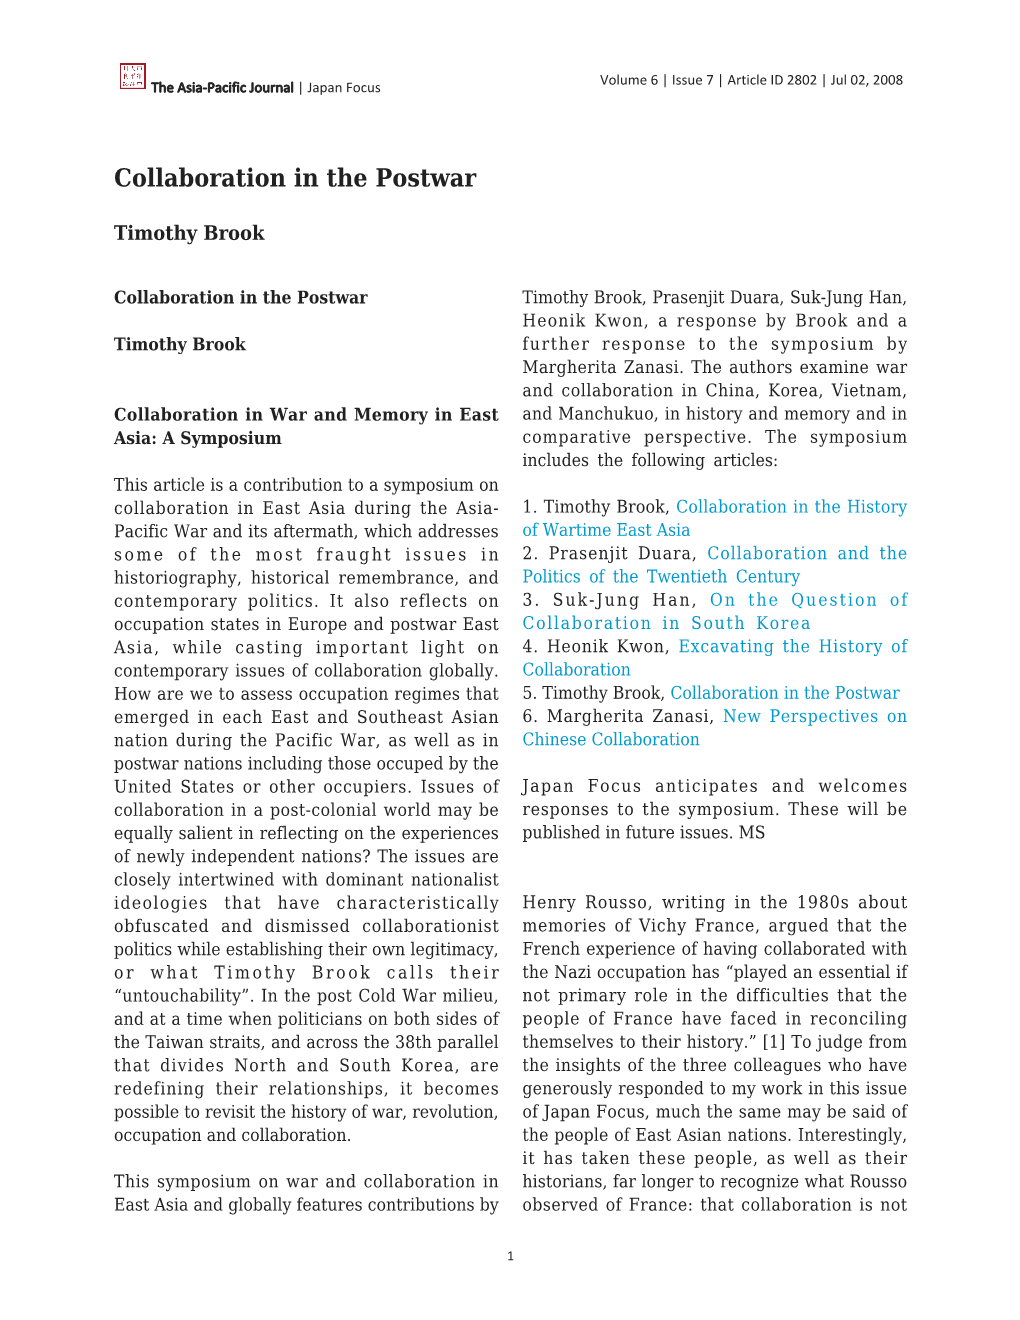 Collaboration in the Postwar